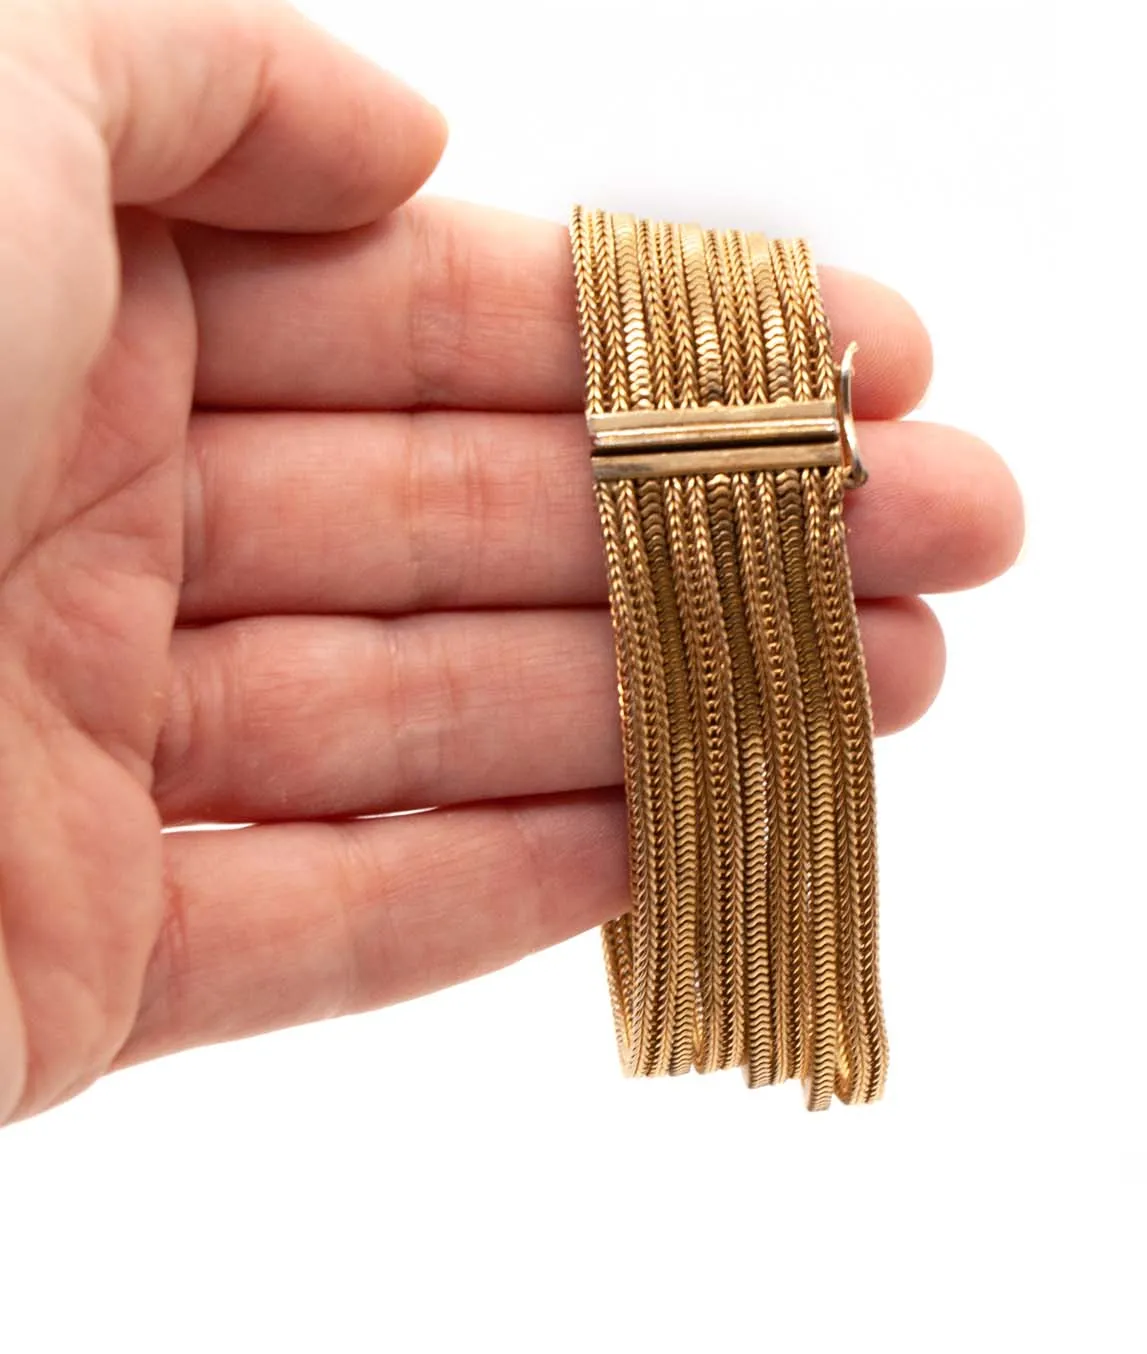 Grosse multi-chain woven gold plated bracelet held in hand